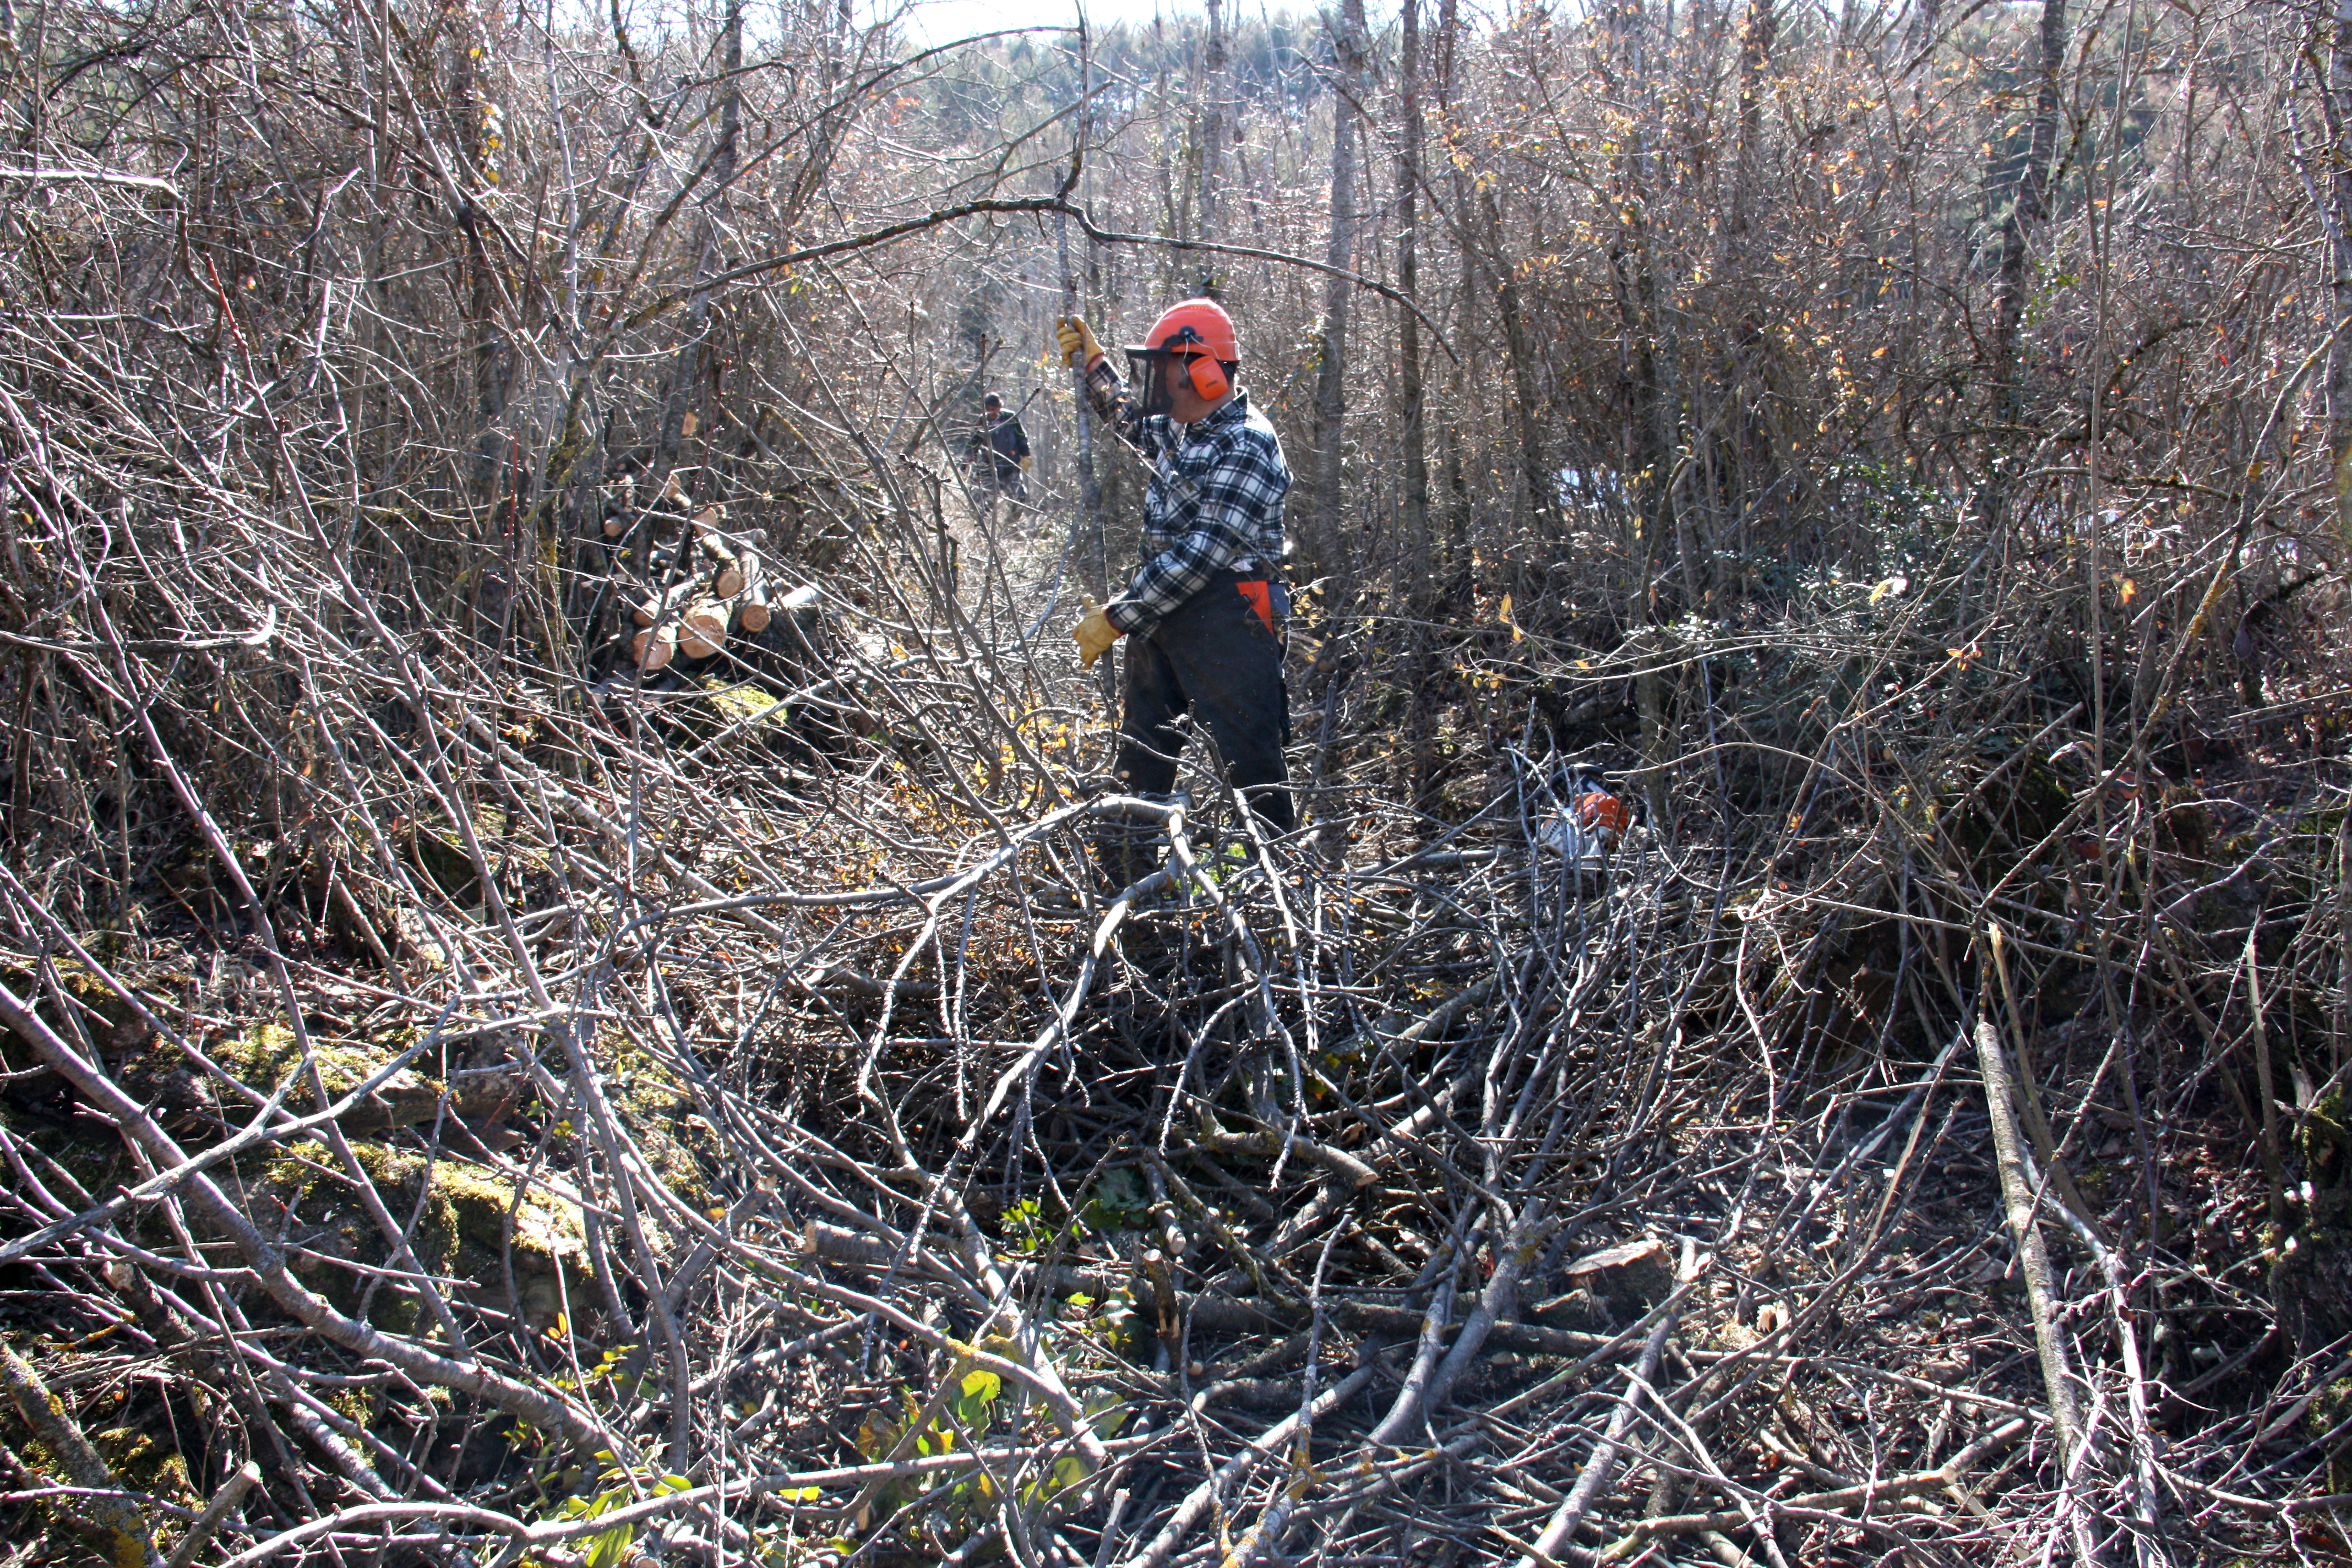 Worker clearing path in Alt Urgell region (by ACN)